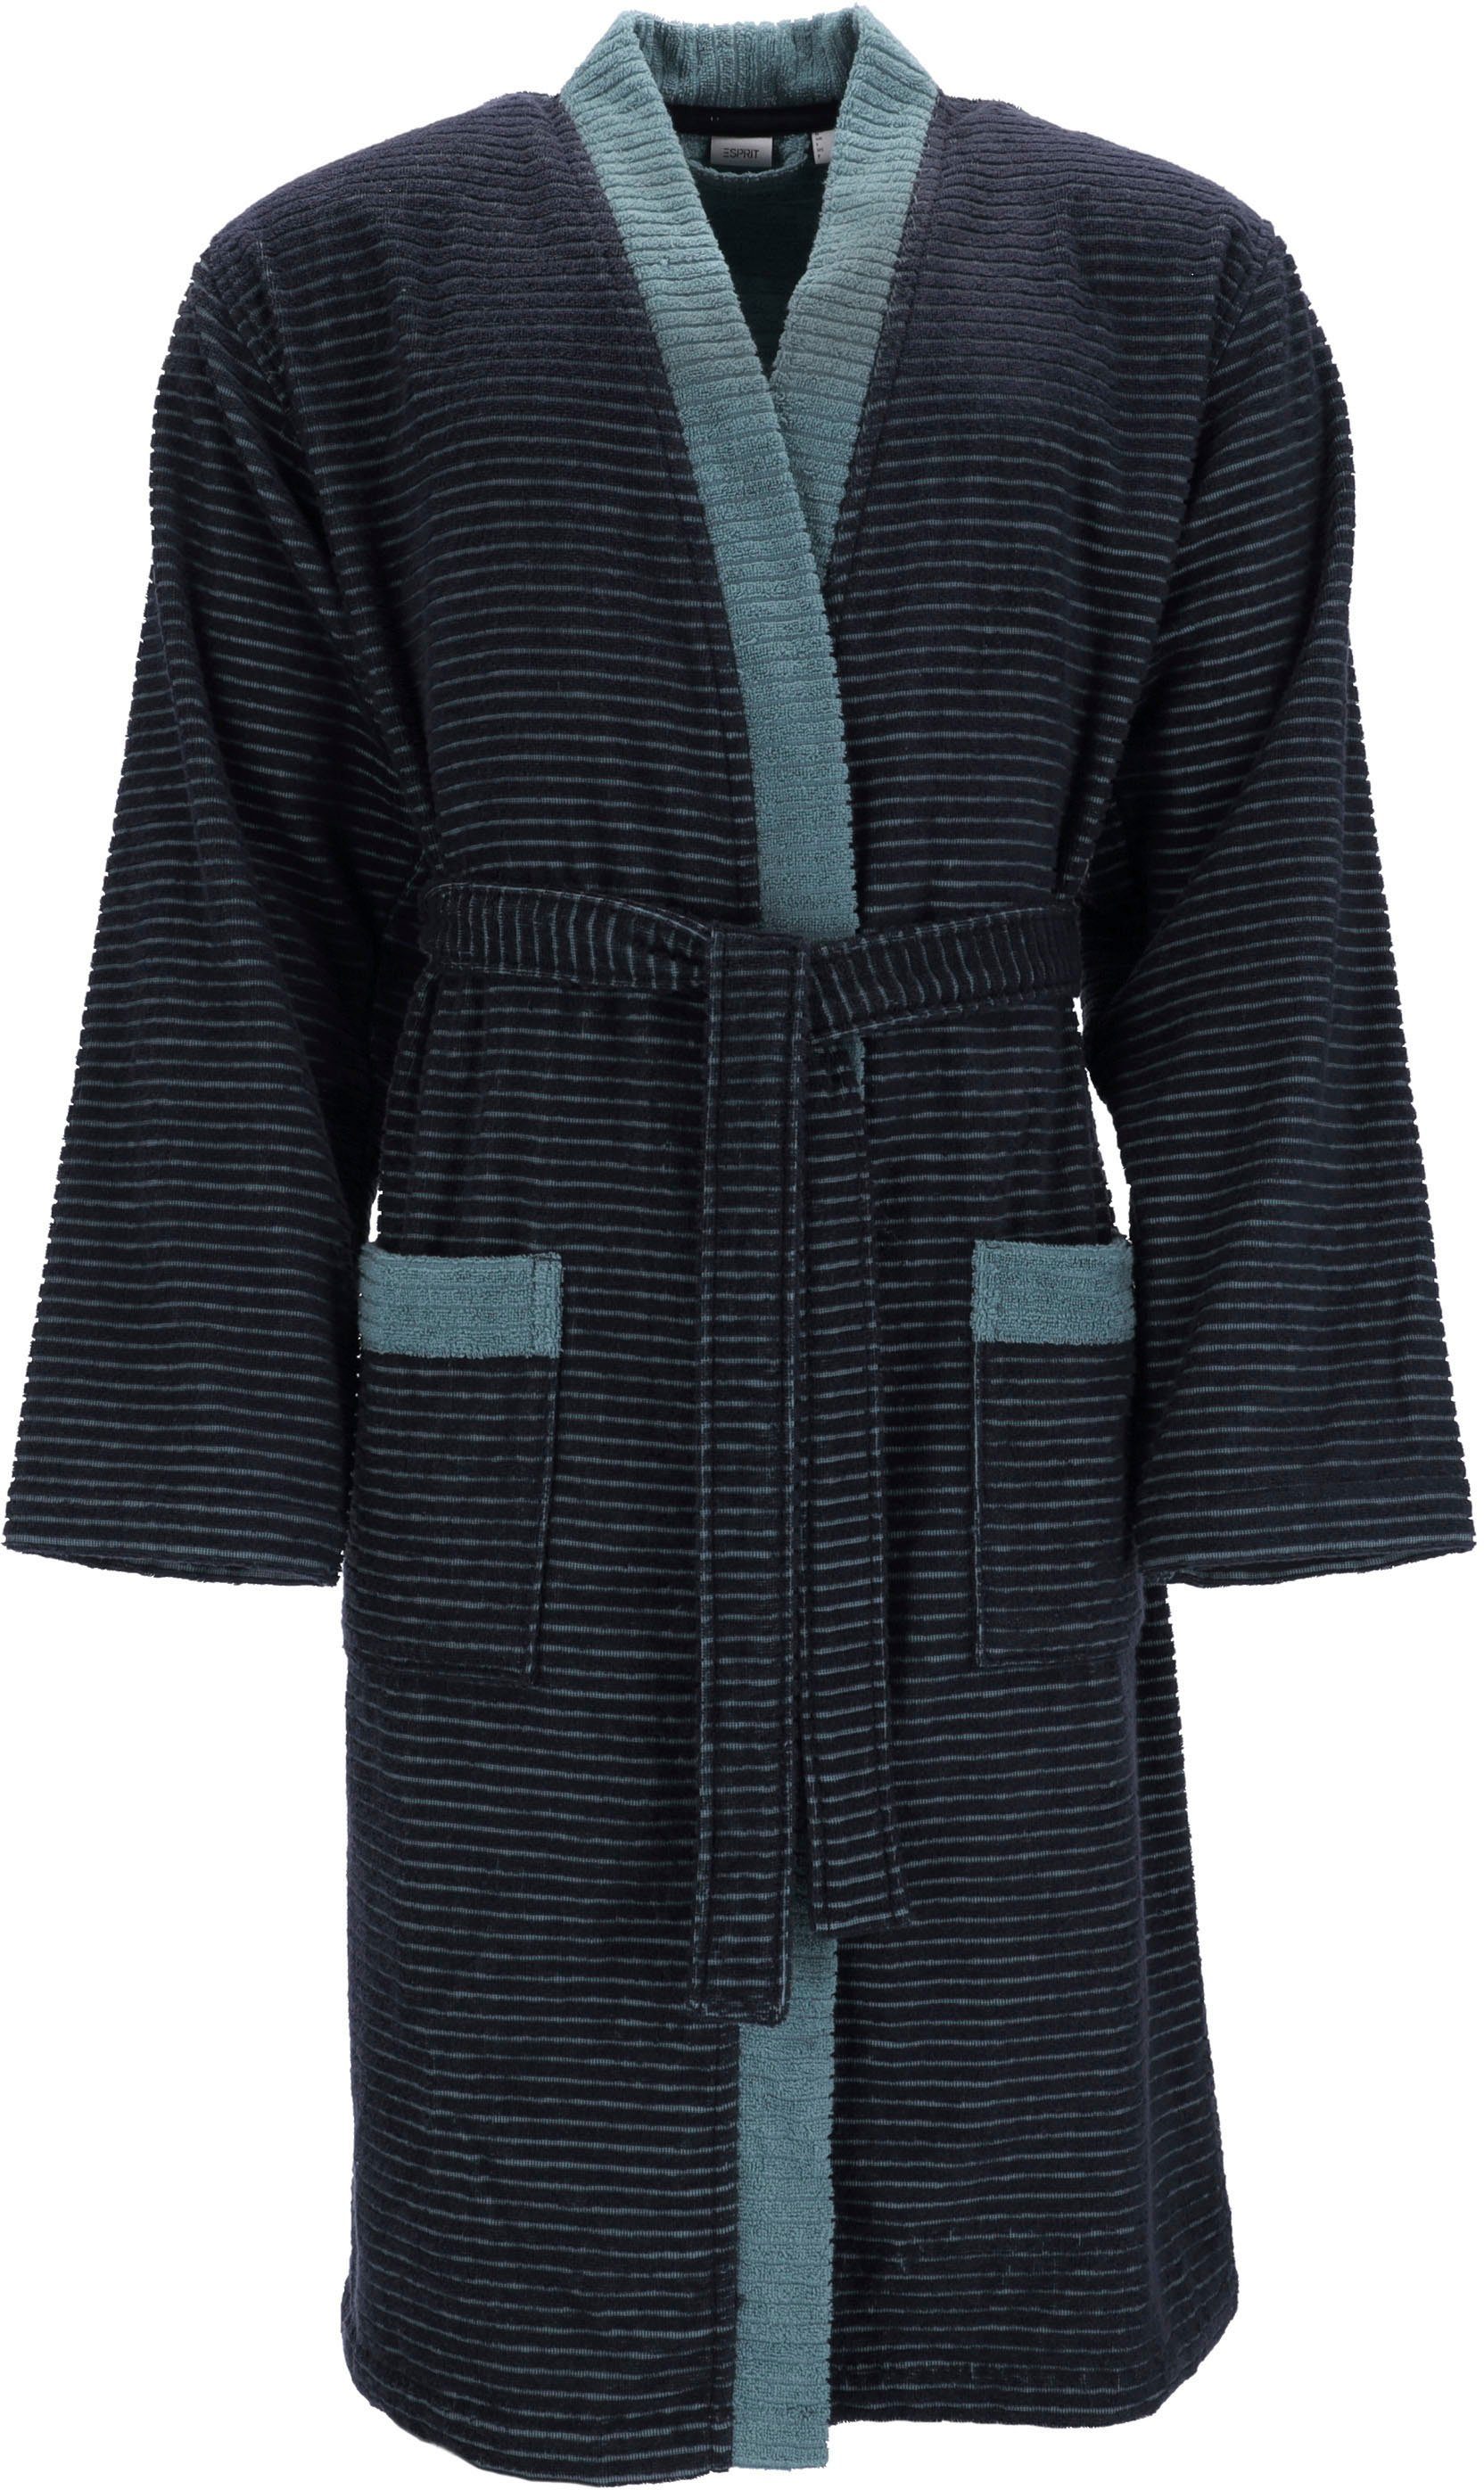 Esprit Herrenbademantel Double Stripe, Langform, Webfrottier, Kimono-Kragen, Gürtel, Doubleface Kimonomantel navy blue